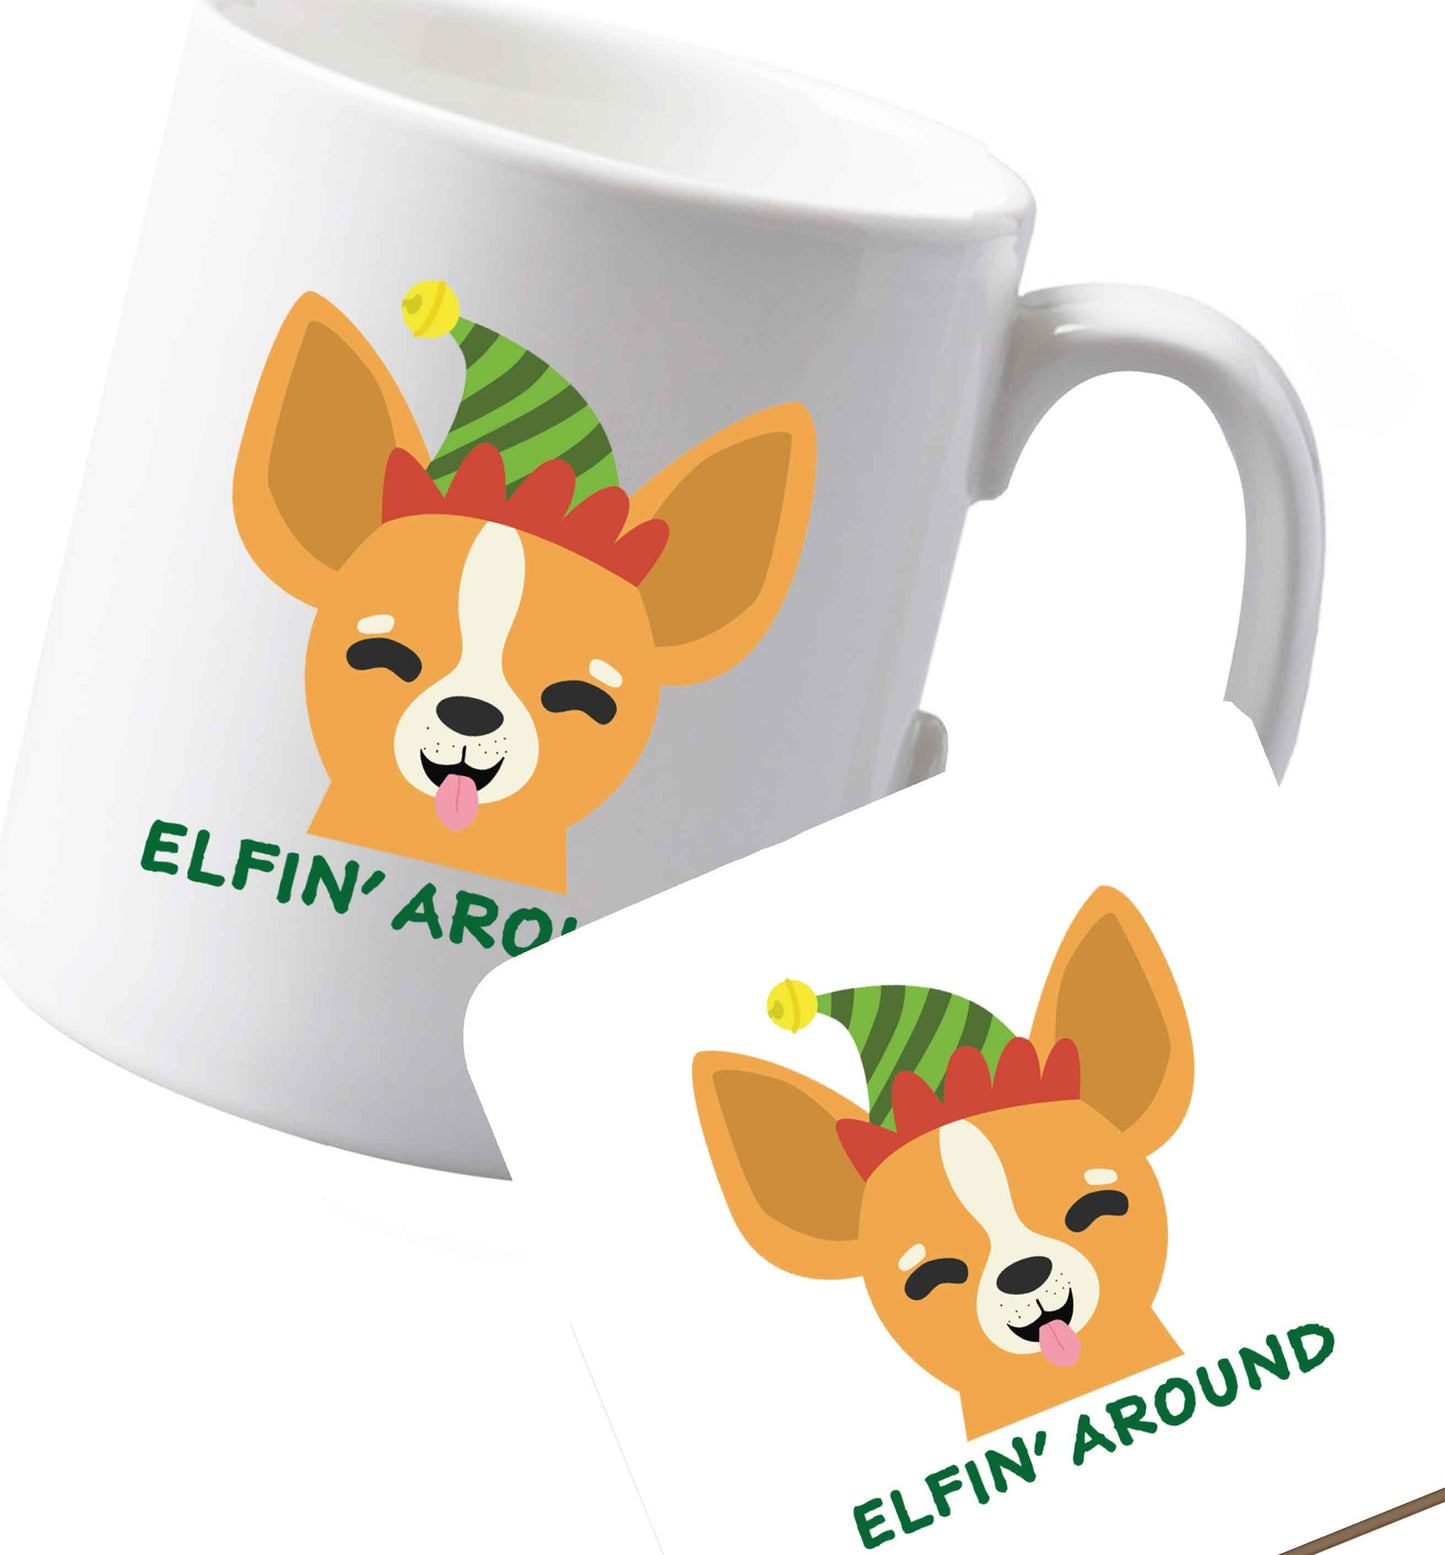 10 oz Ceramic mug and coaster Elfin' around both sides